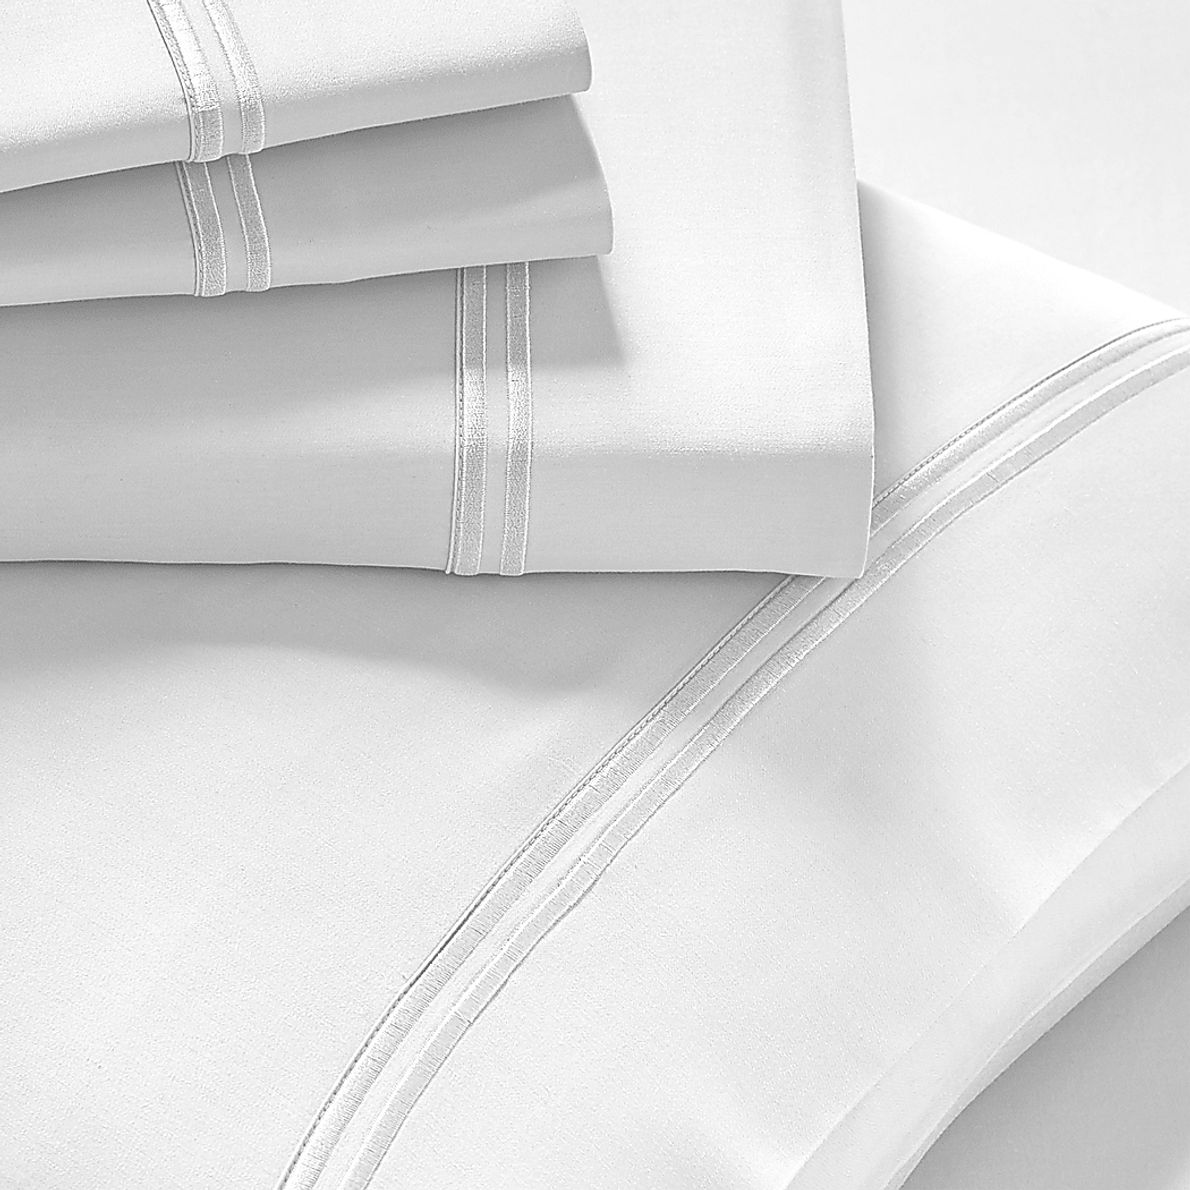 PureCare Premium Soft Touch White 4 Pc California King Bed Sheet Set